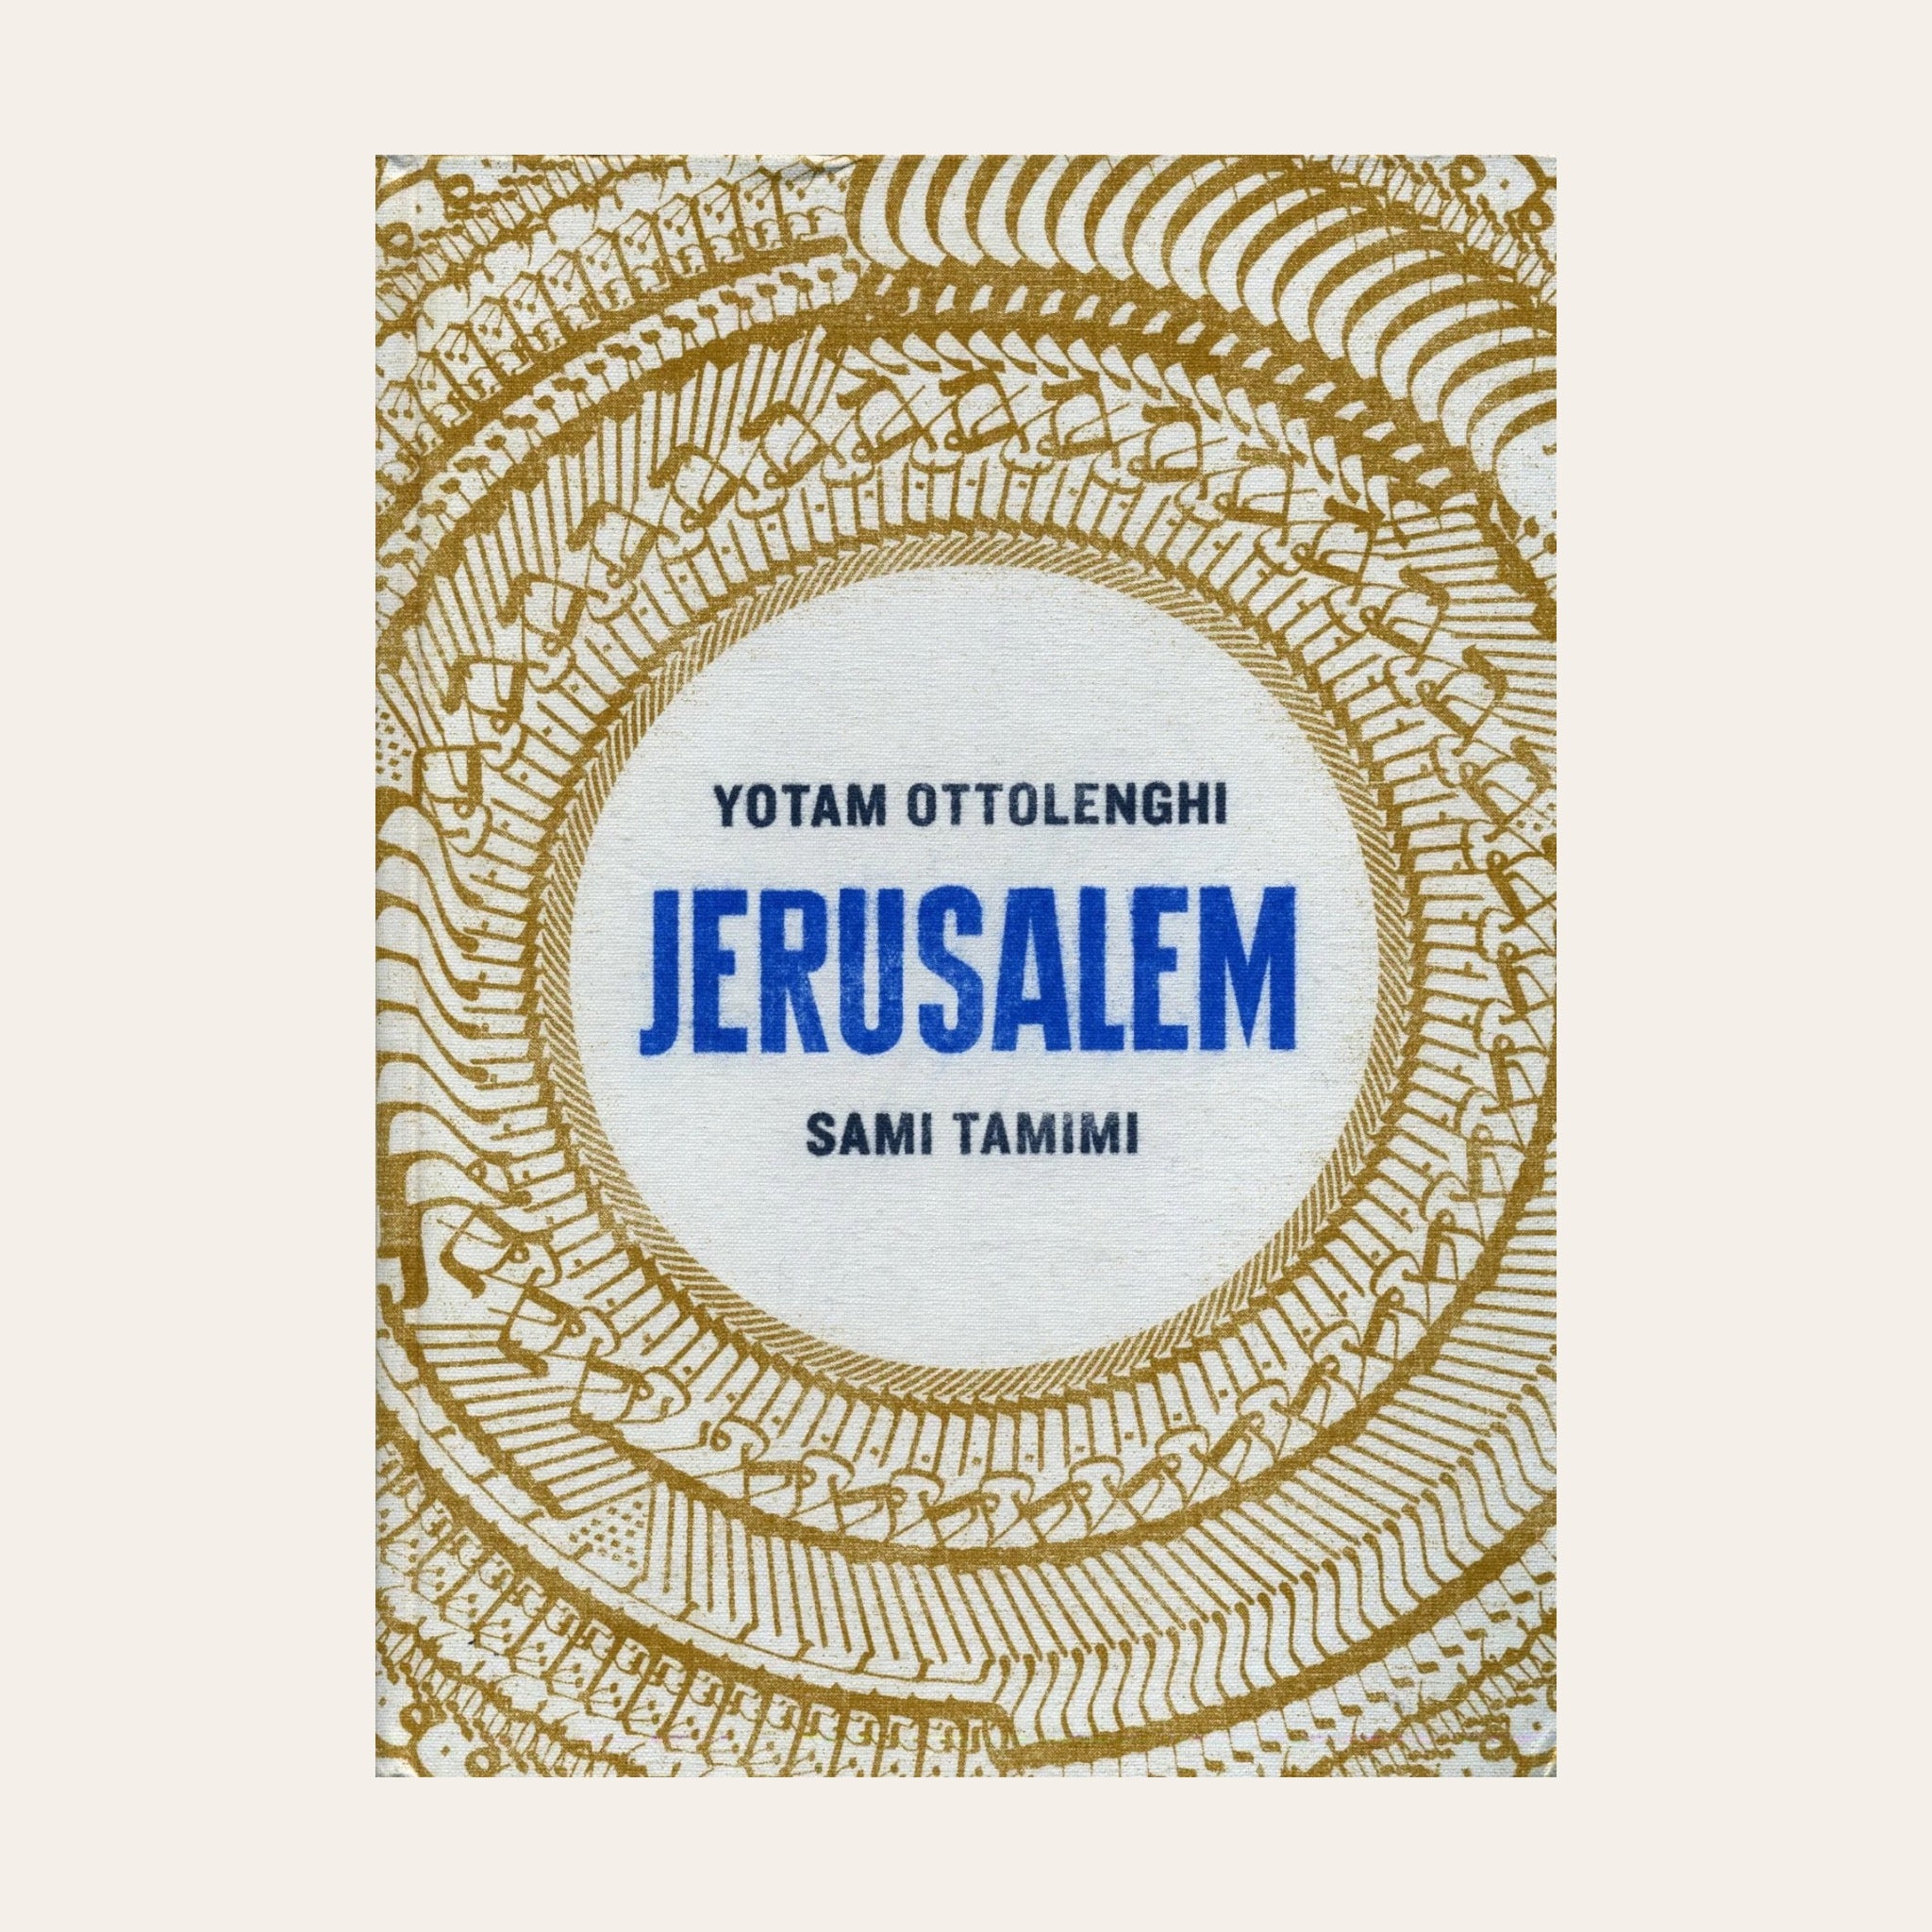 LIVRE JERUSALEM - Yotam Ottolenghi et Sami Tamimi